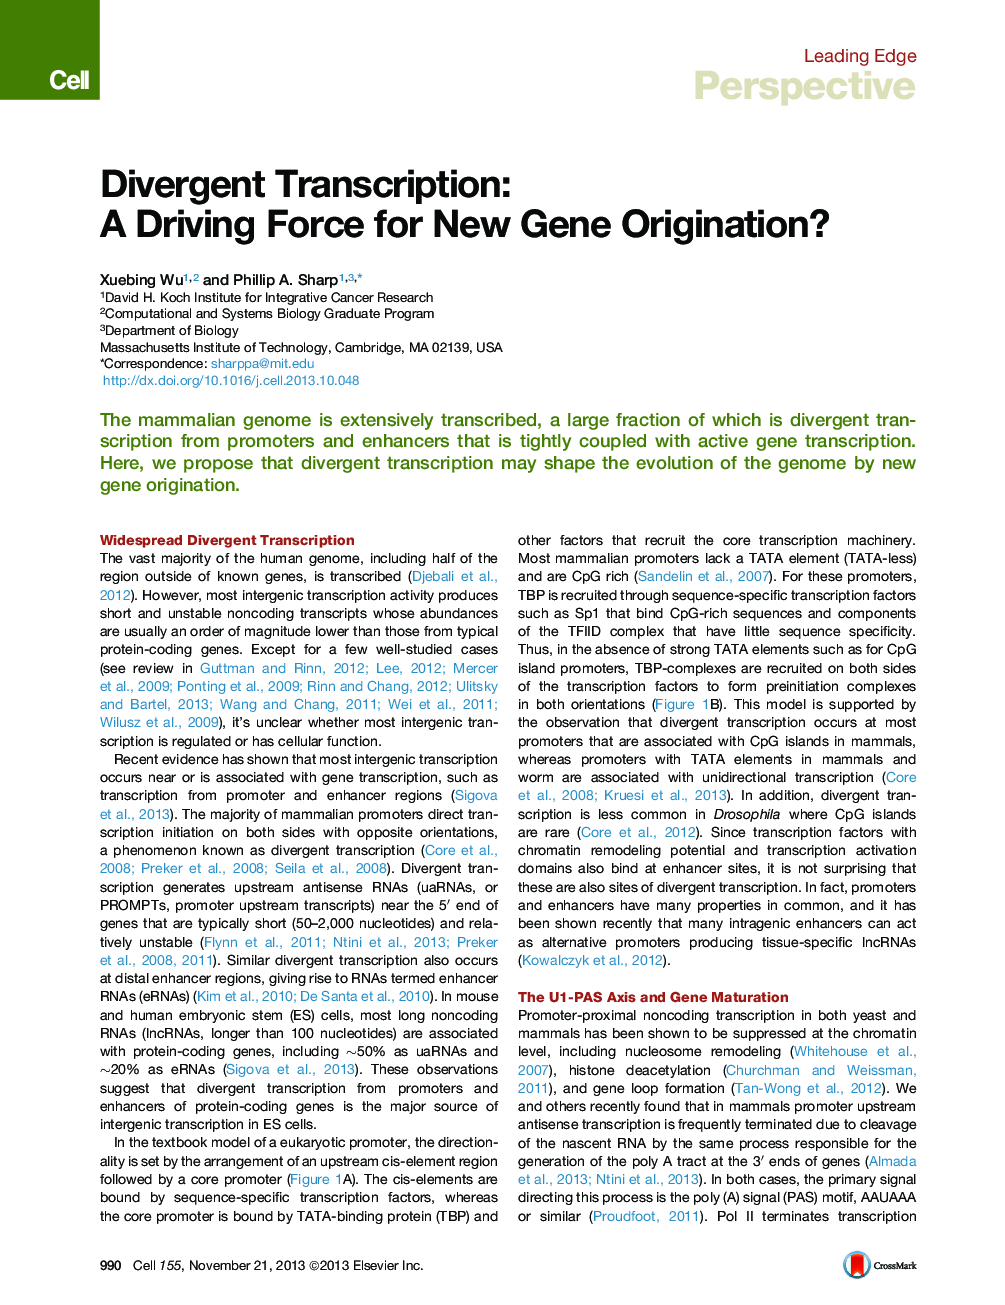 Divergent Transcription: A Driving Force for New Gene Origination?